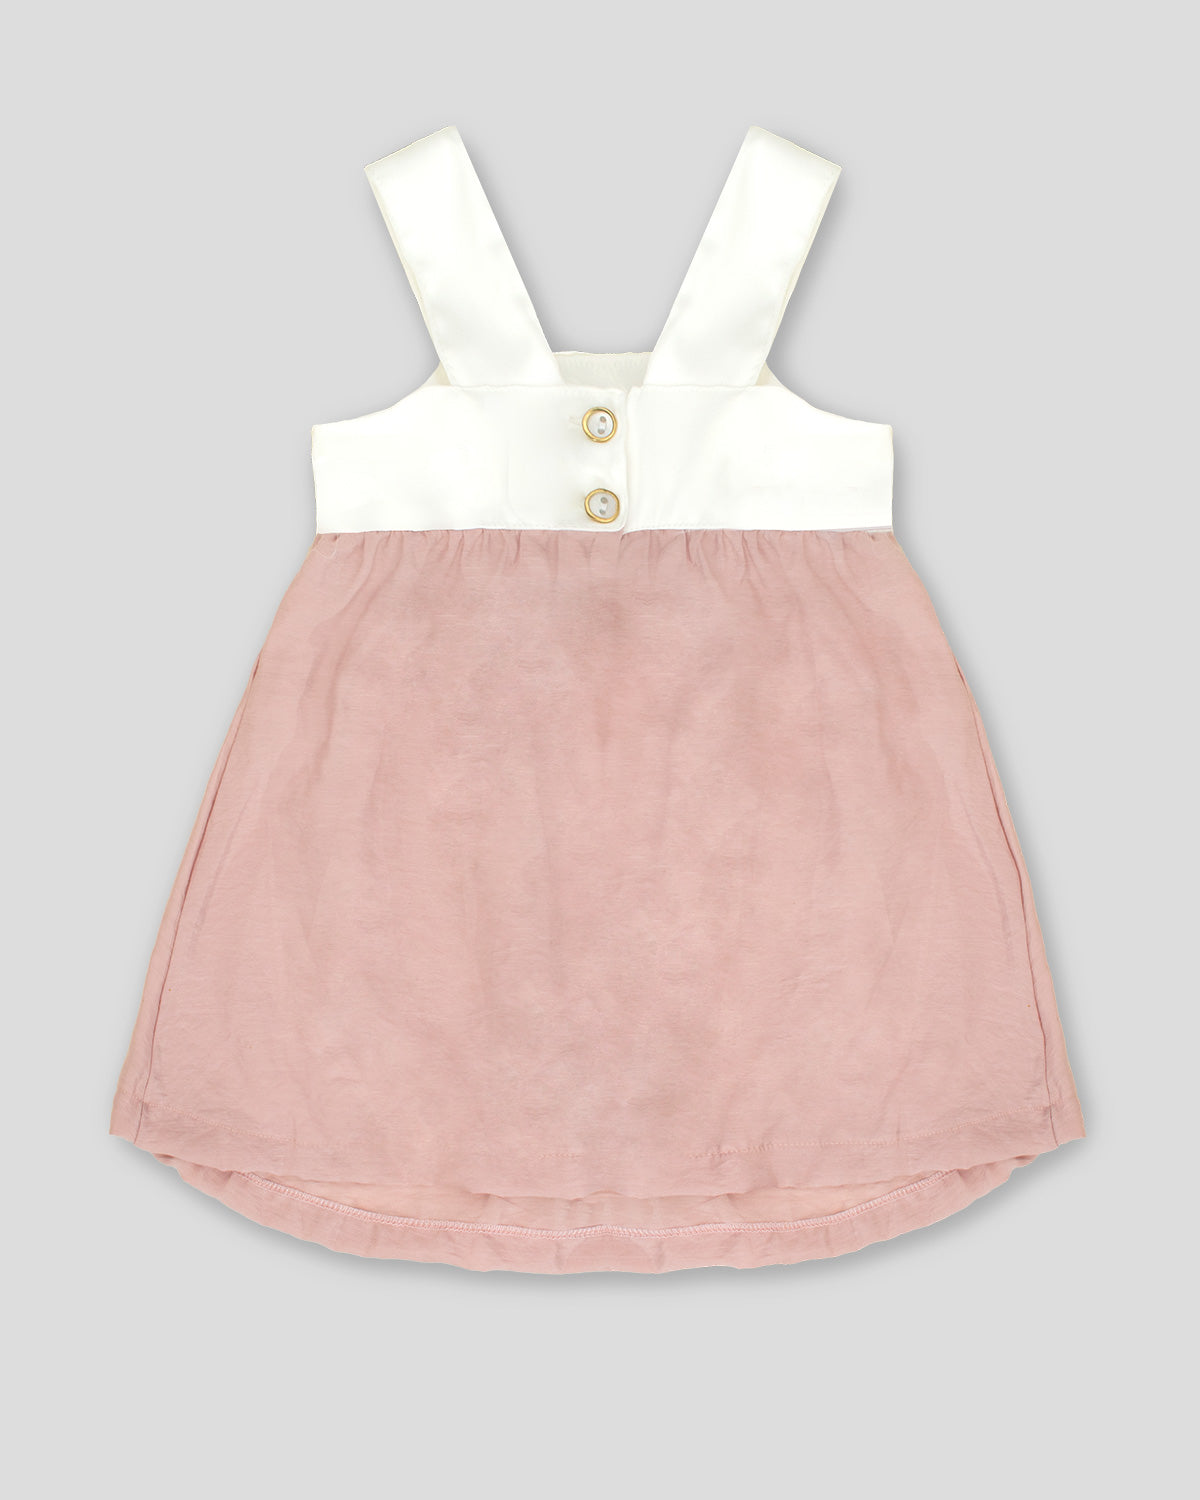 Vestido palo de rosa con moño y tiras blancas para niña